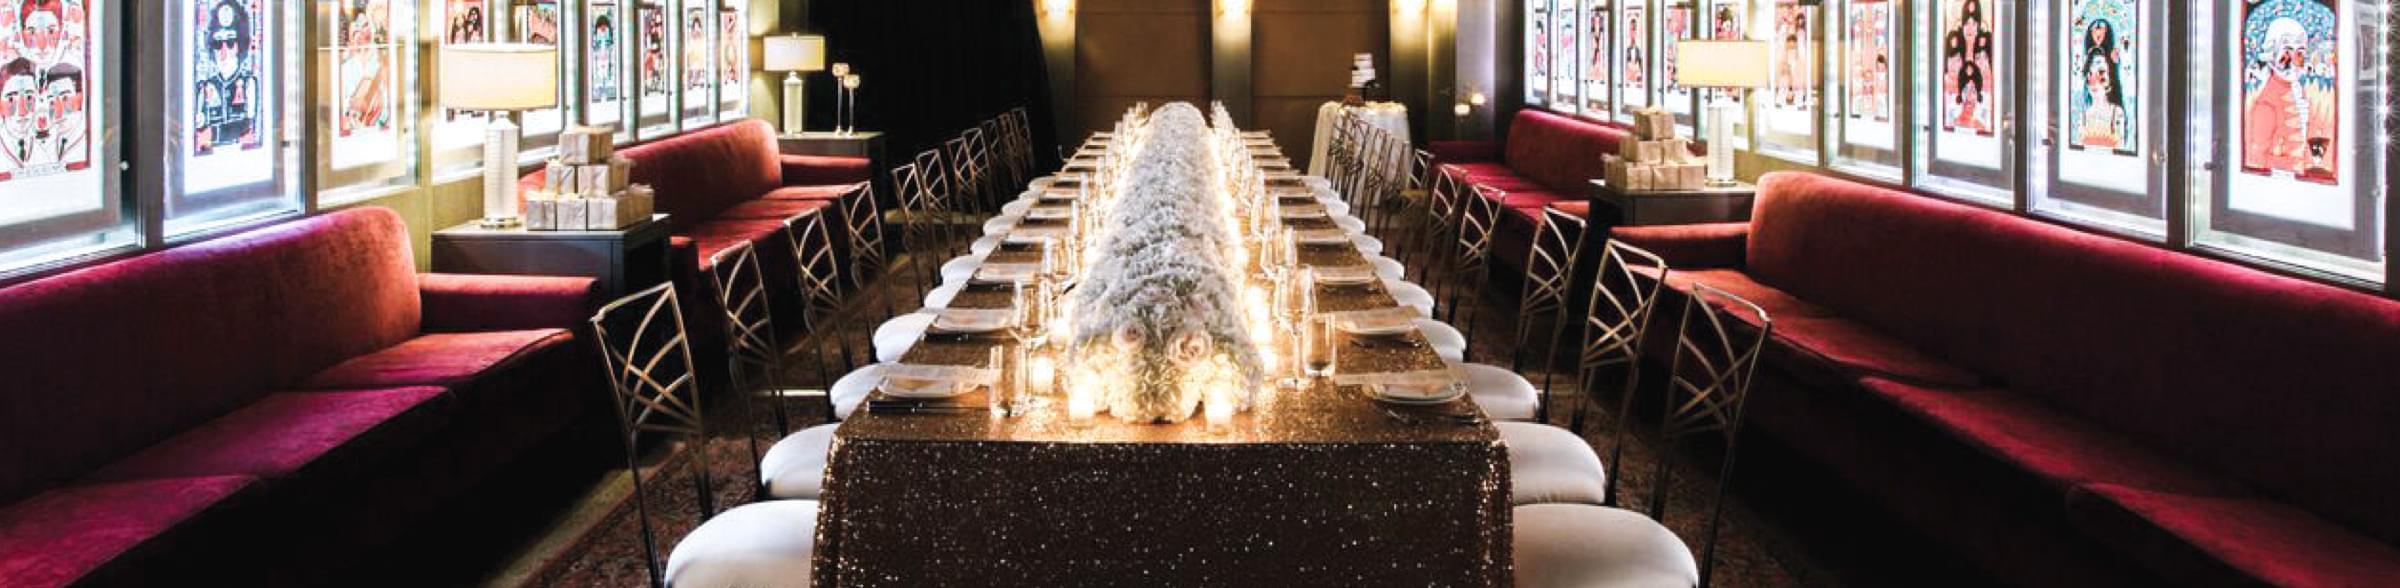 The 10 Best Restaurant Wedding Venues in Dallas - WeddingWire